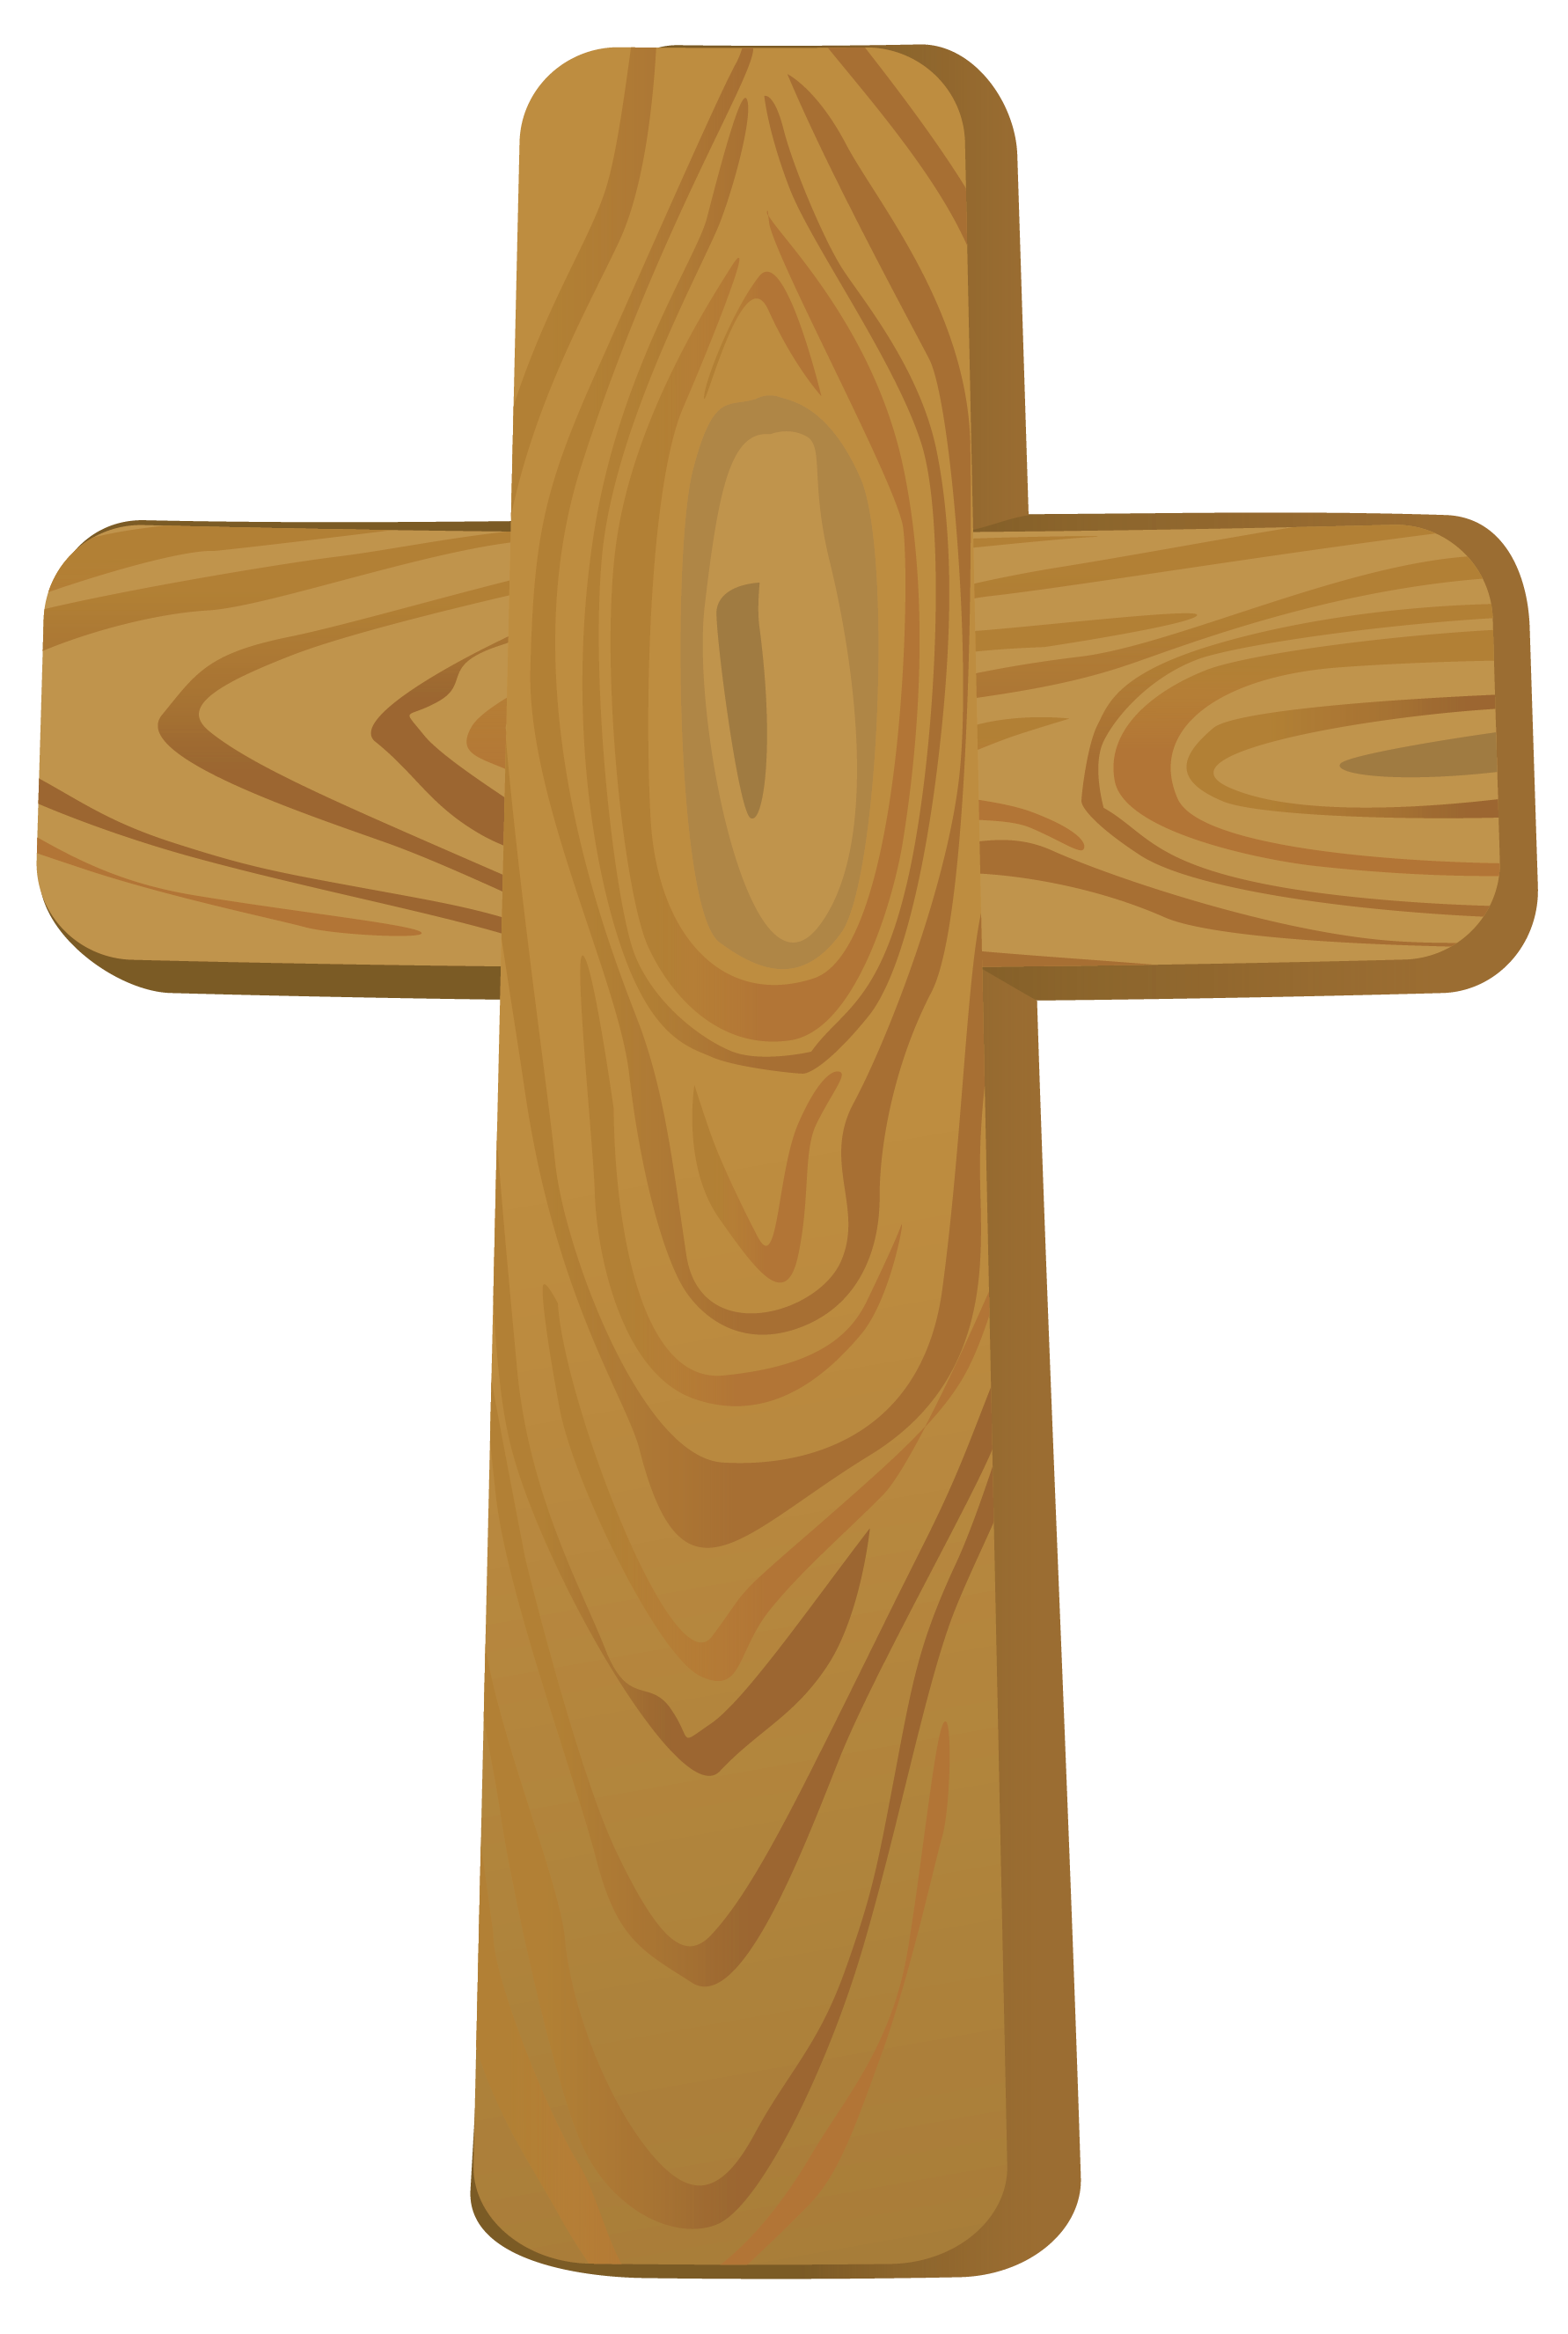 free wood cross clip art - photo #12